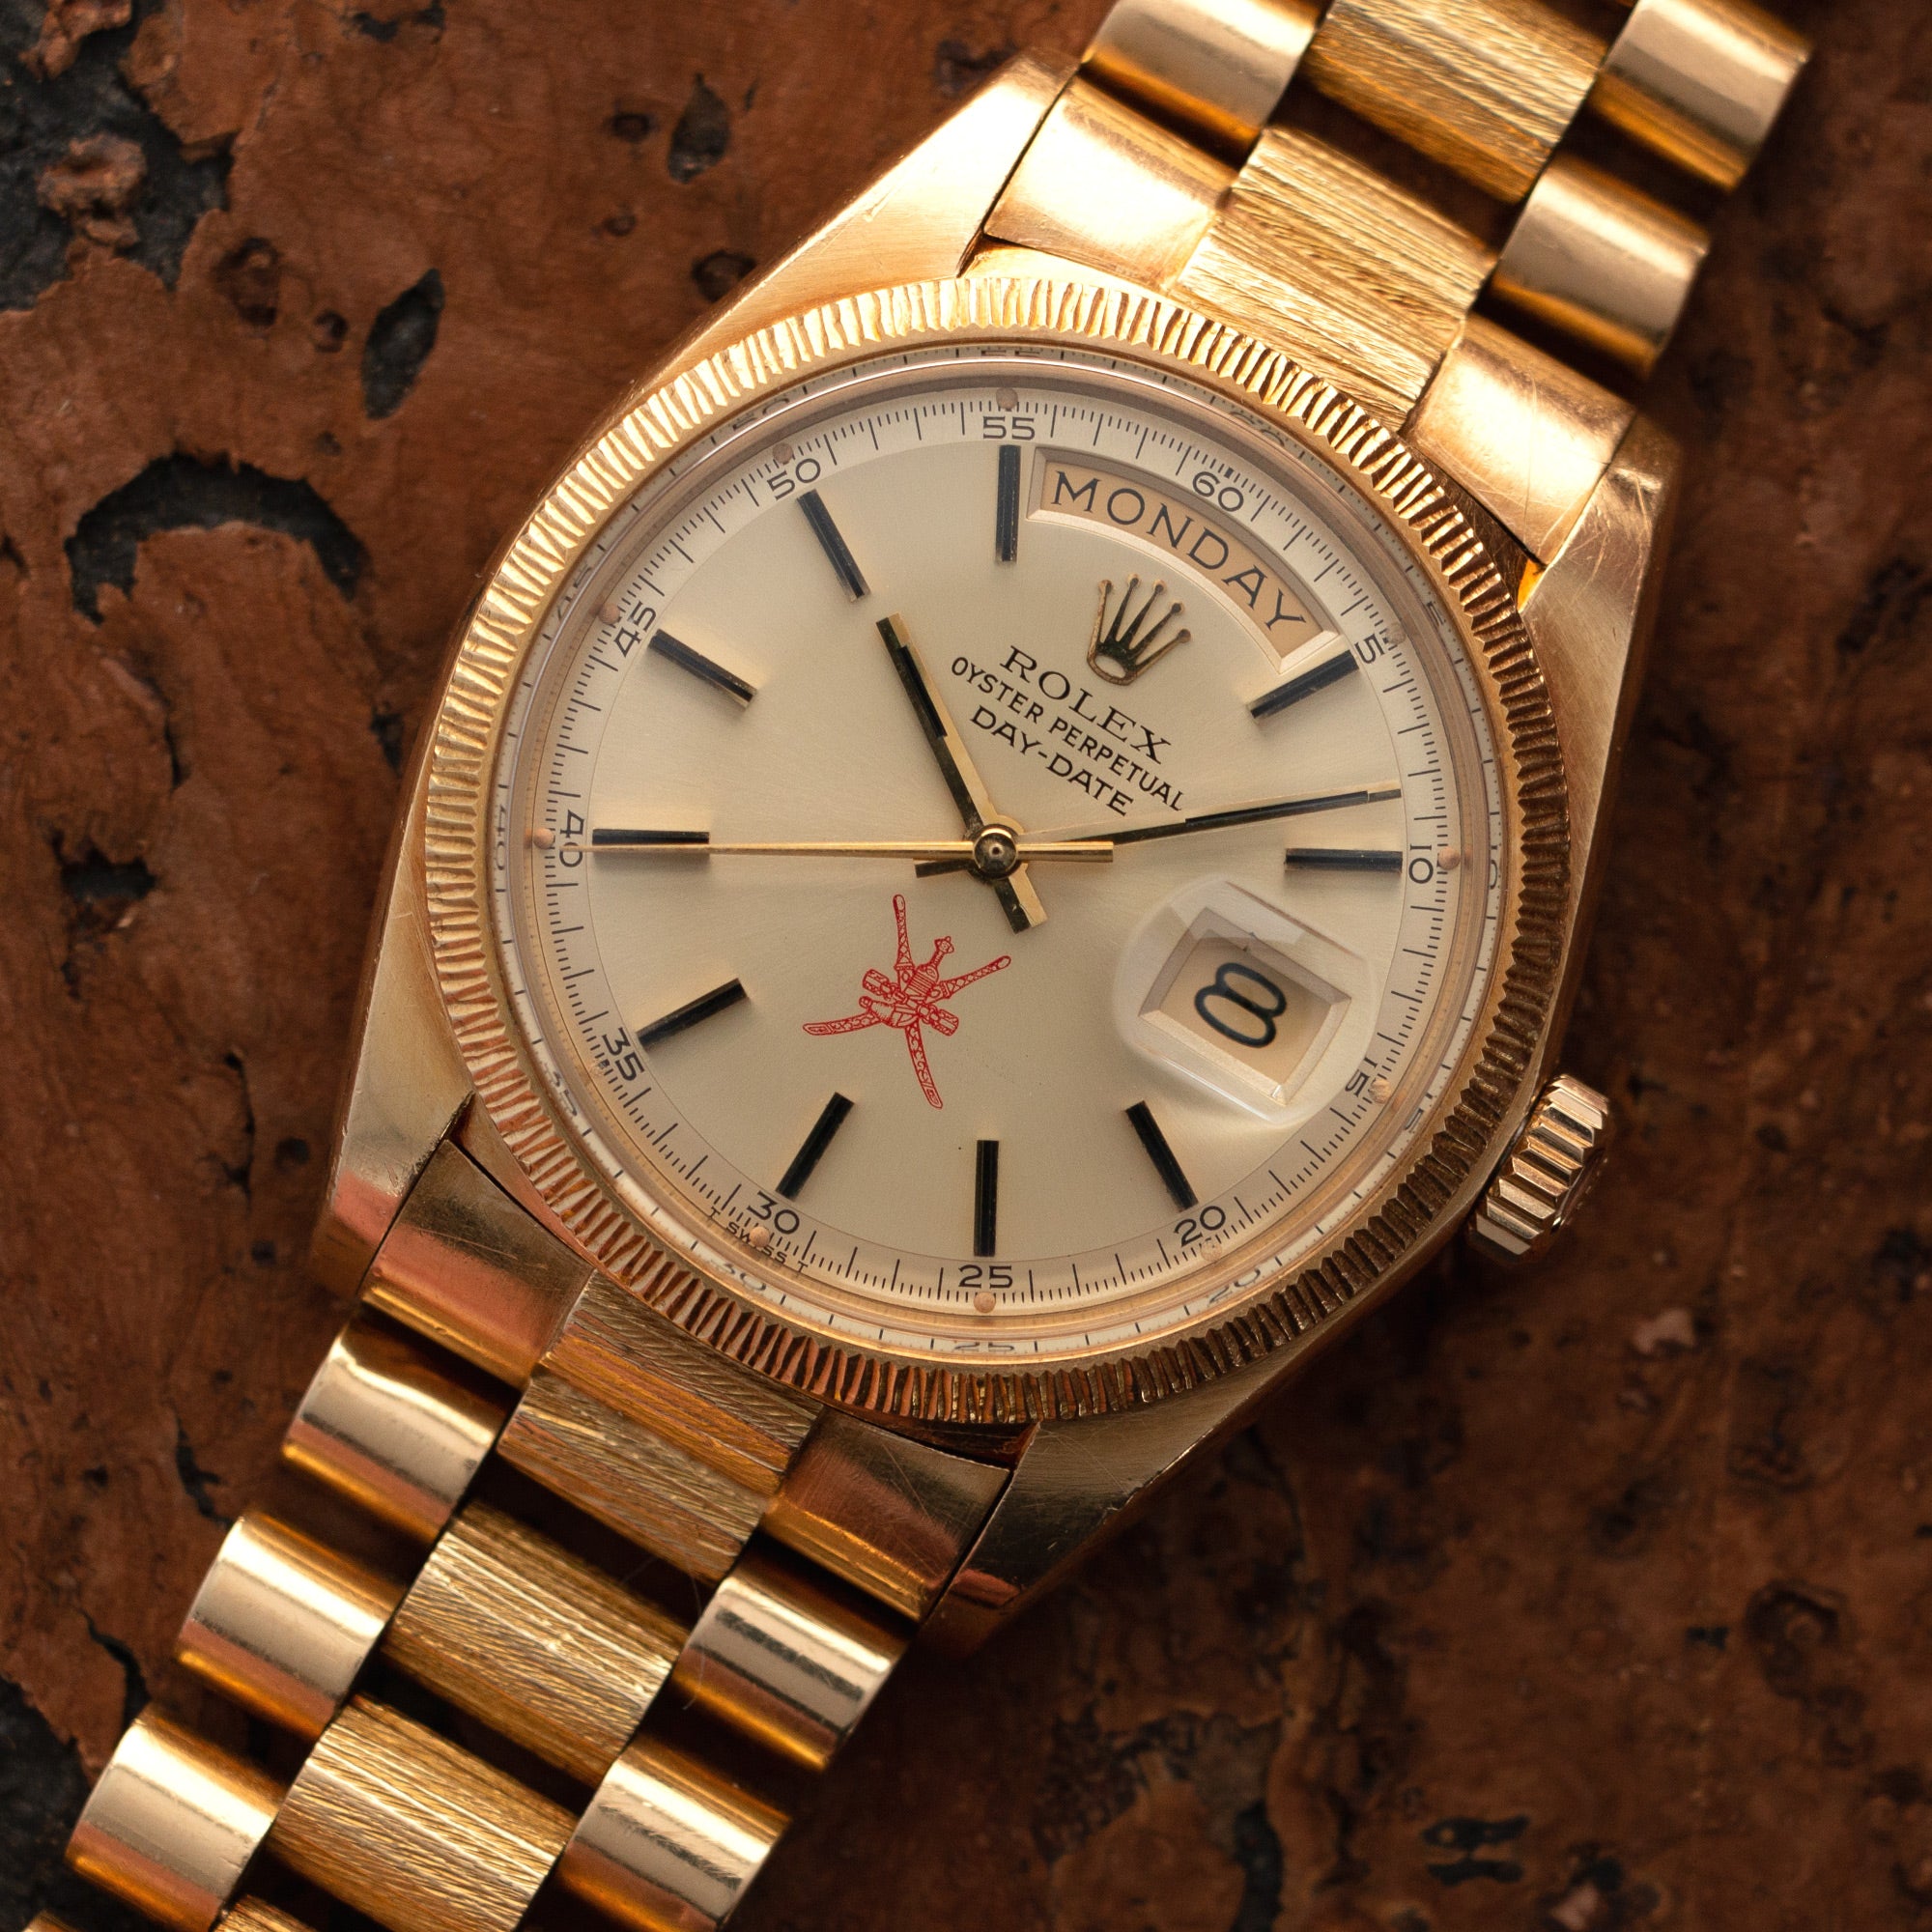 Rolex - Rolex Yellow Gold Day-Date Watch Ref. 1807, Retailed by Asprey with Khanjar Emblem - The Keystone Watches